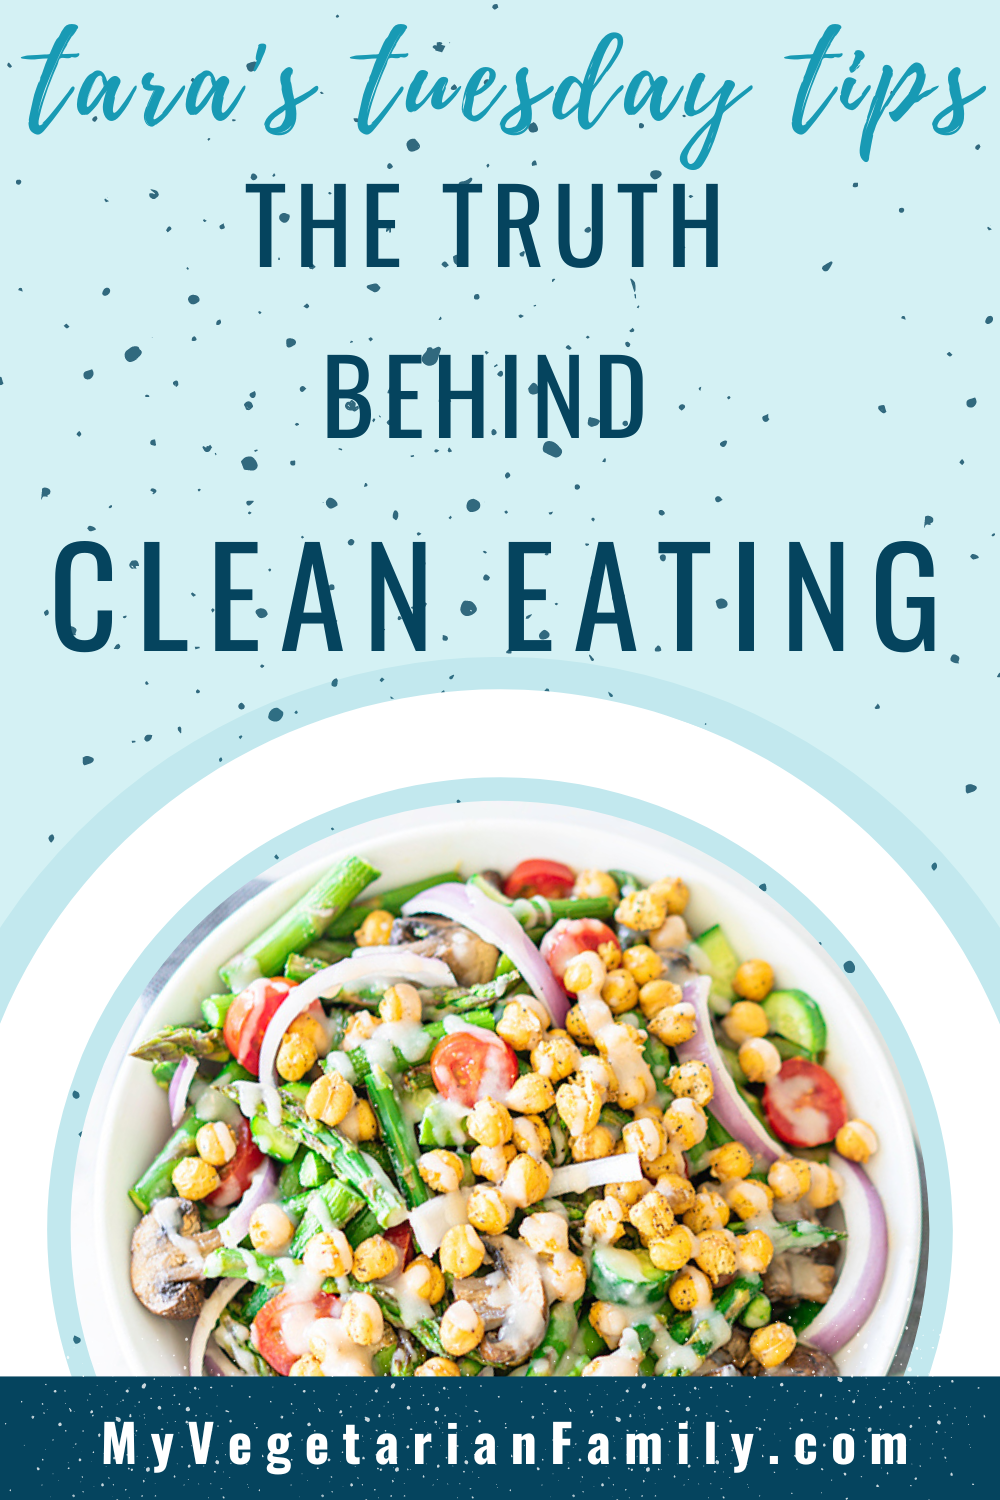 The Truth Behind Clean Eating | My Vegetarian Family | Tara's Tuesday Tips #cleaneatingtruths #tarastuesdaytips